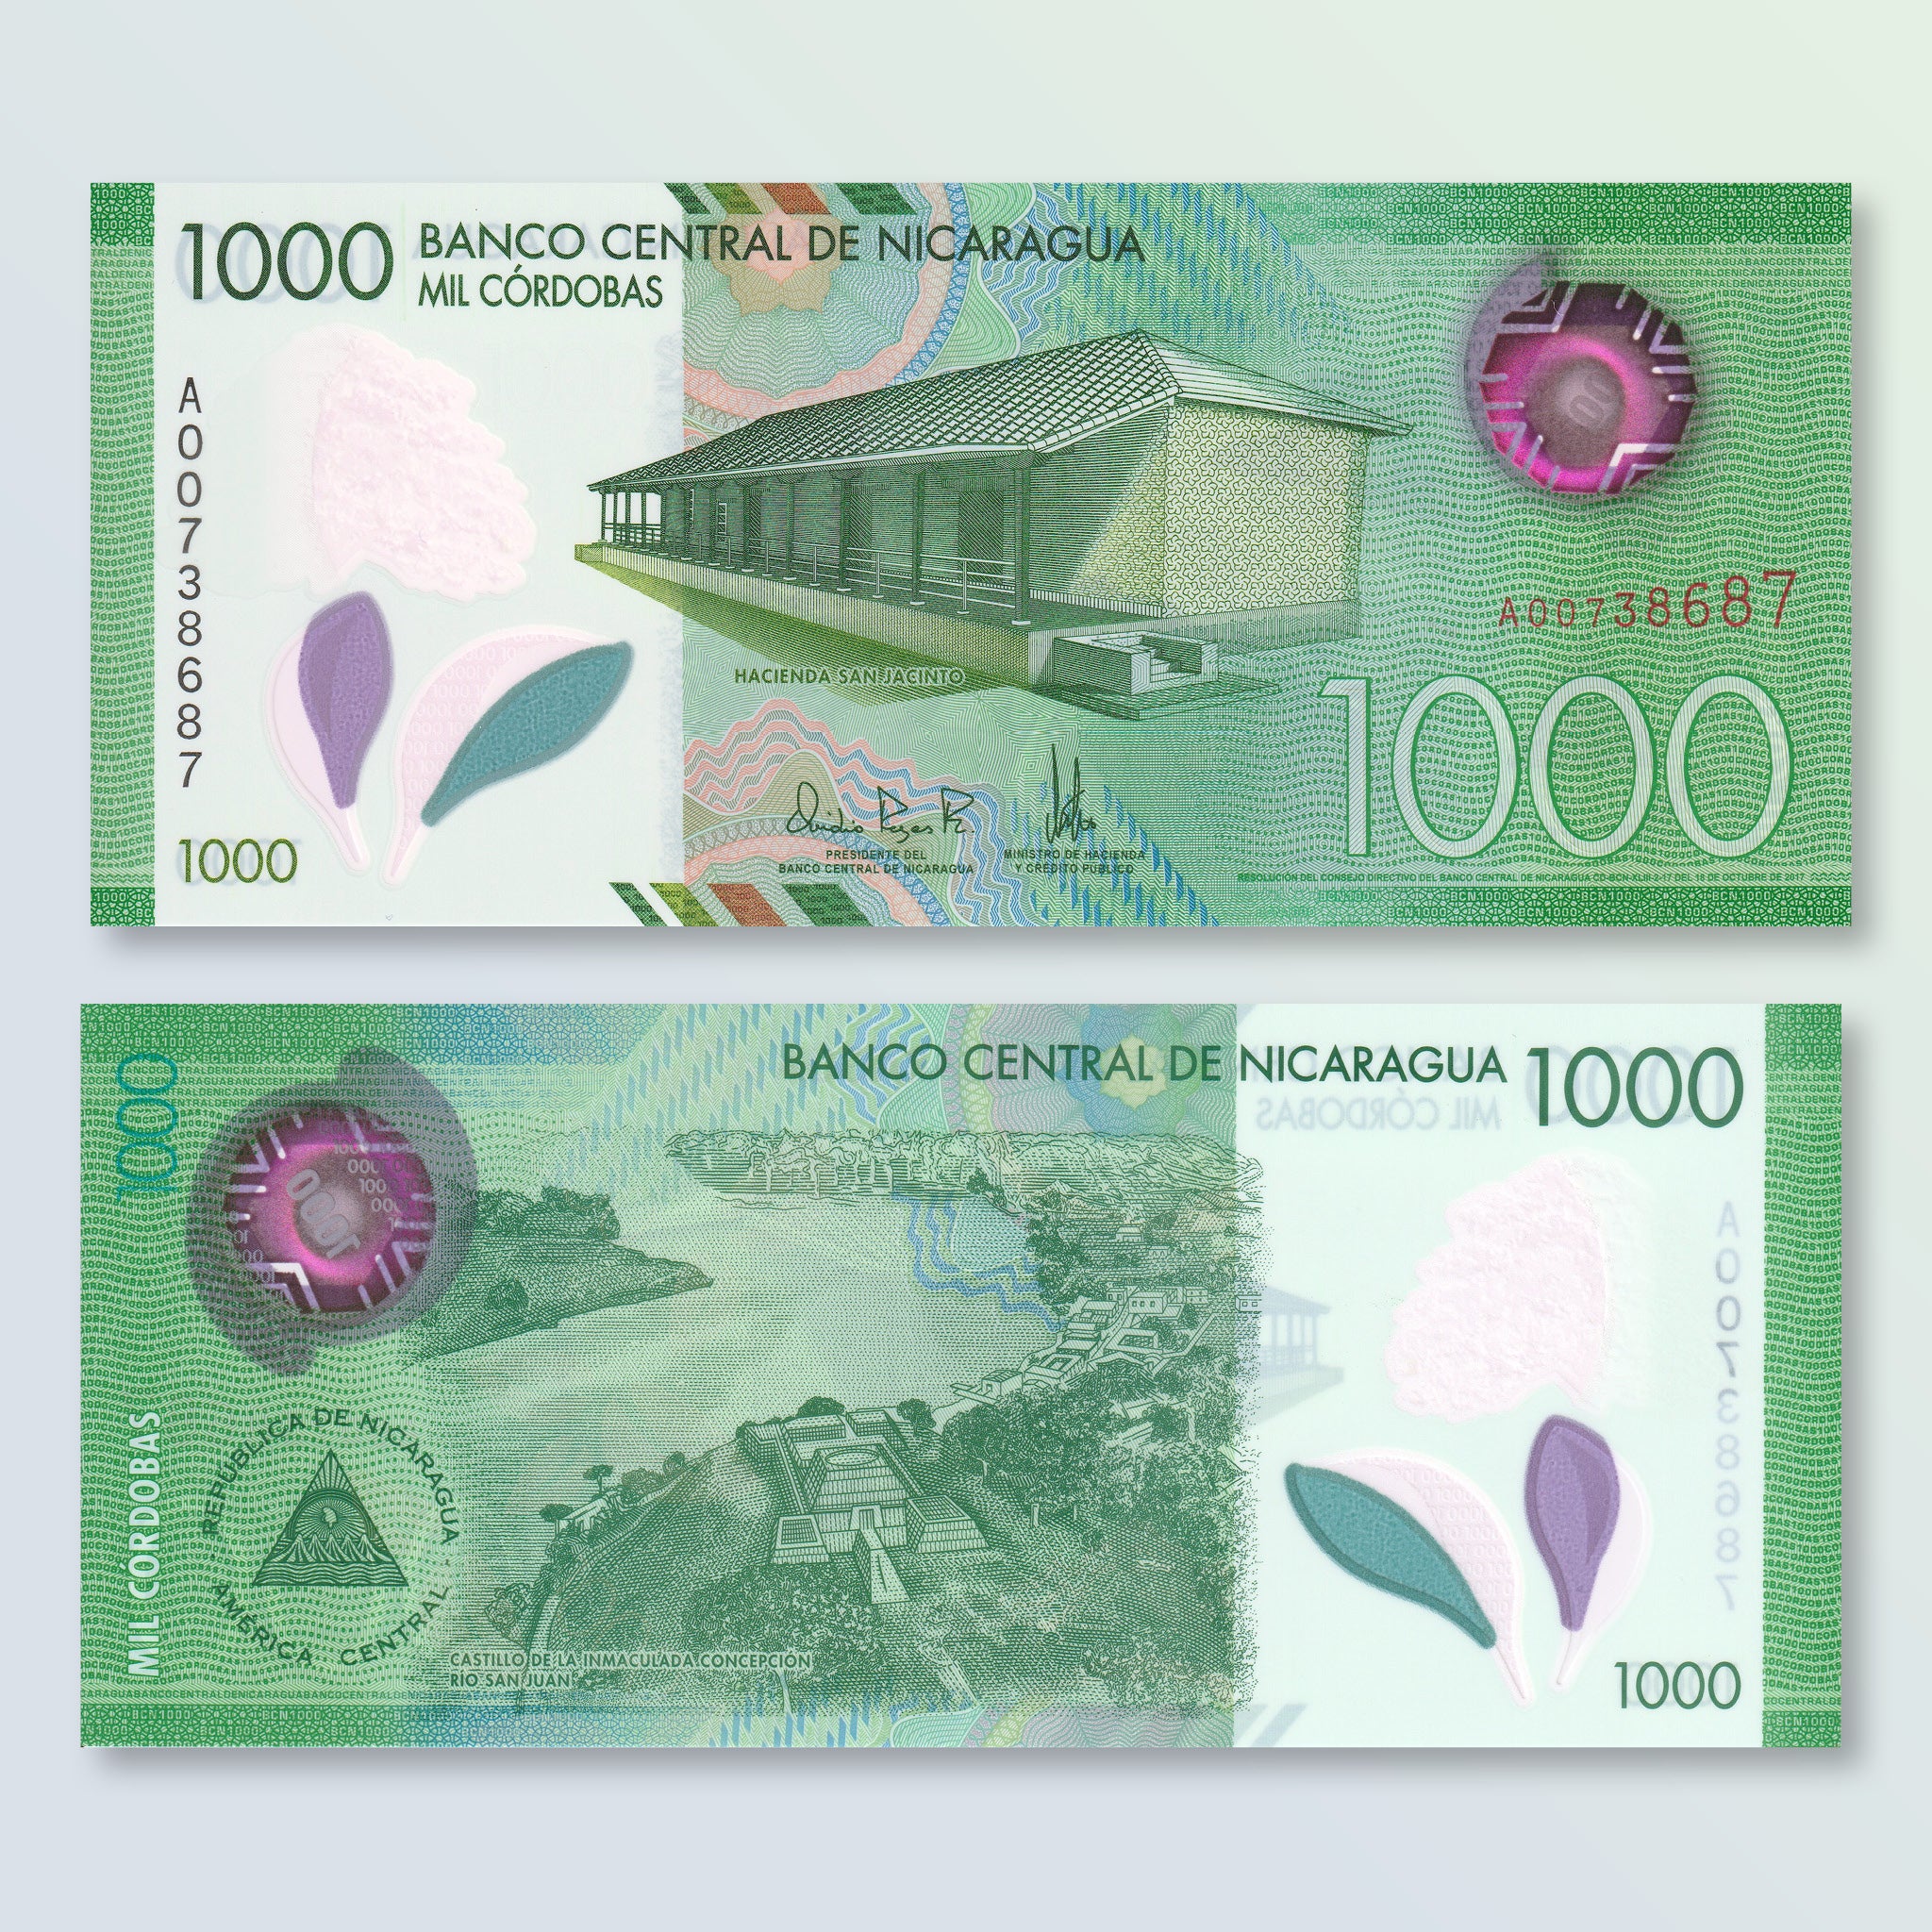 Nicaragua 1000 Córdobas, 2017, B515a, UNC - Robert's World Money - World Banknotes